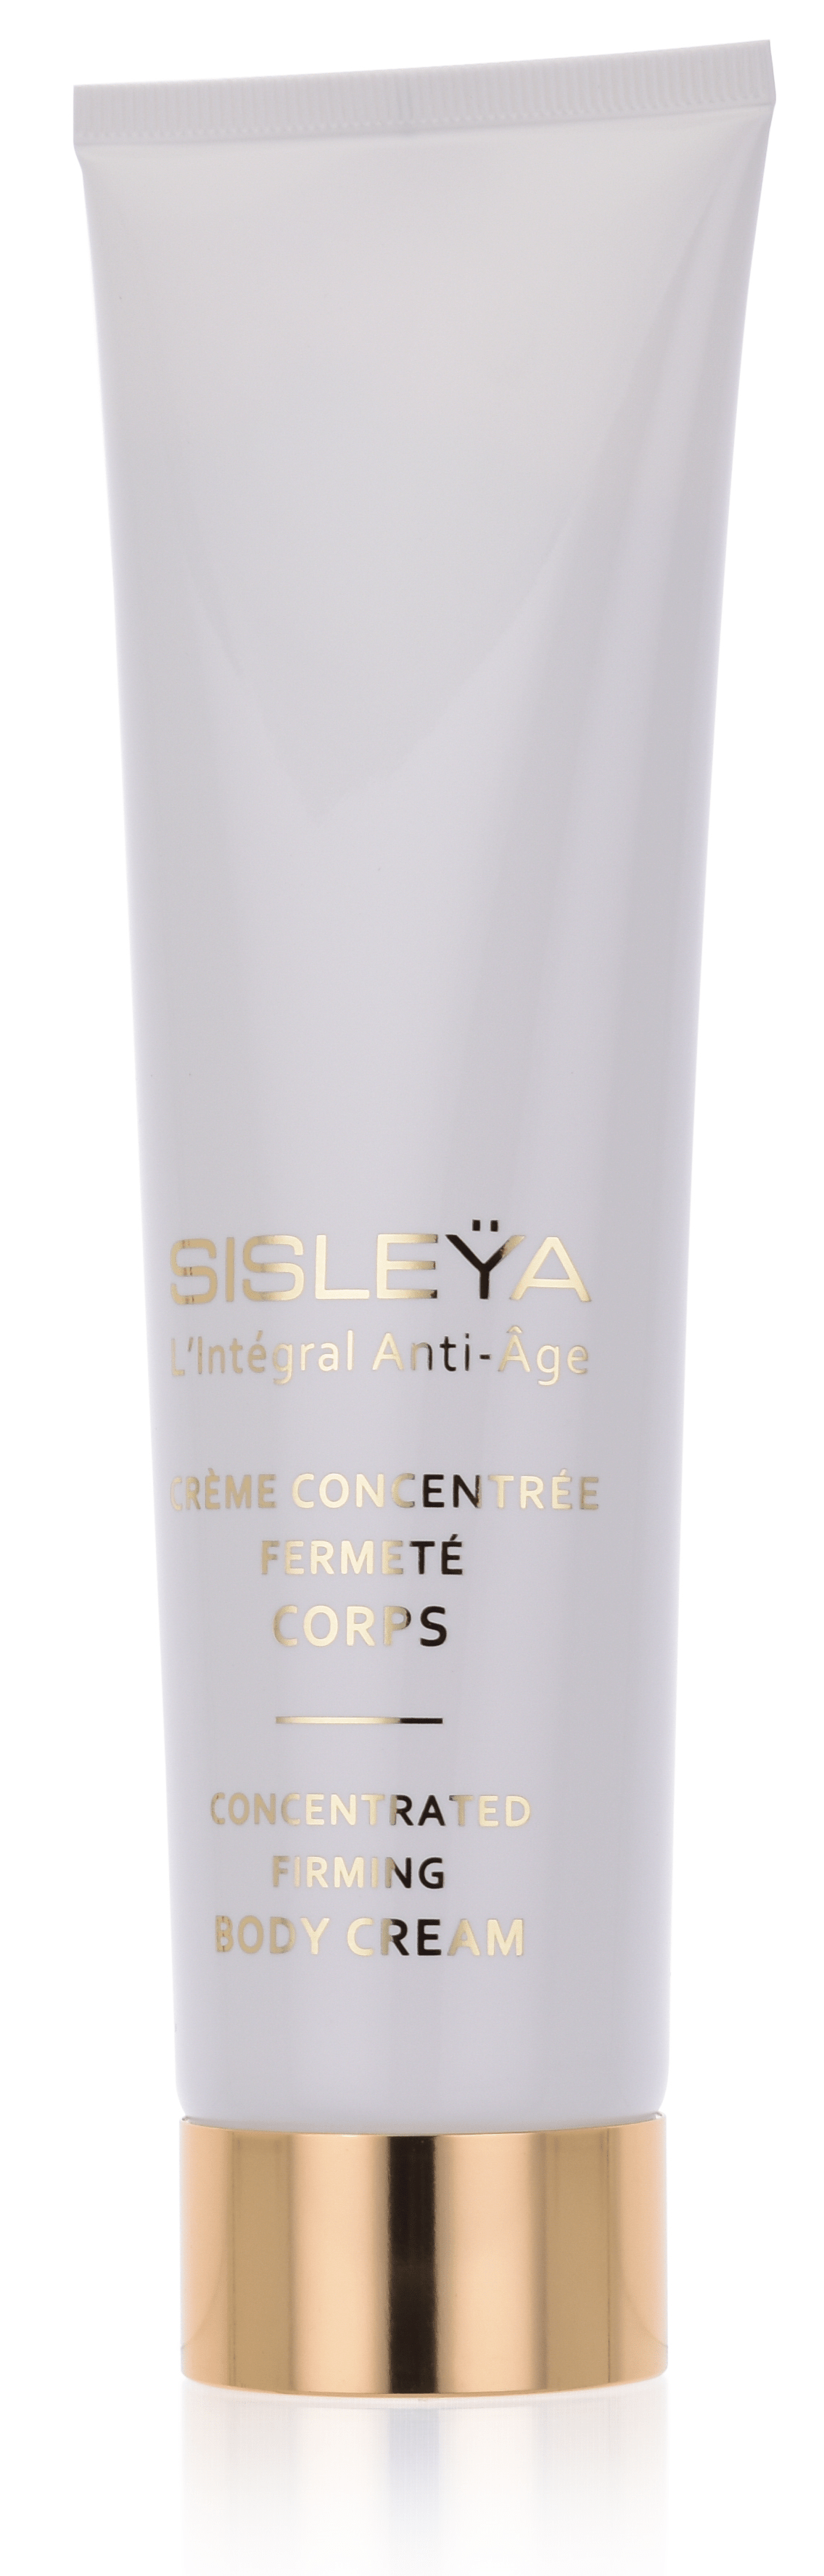 Sisley Sisleÿa - L'Intégral Anti-Âge Crème Concentrée Fermeté Corps 150 ml